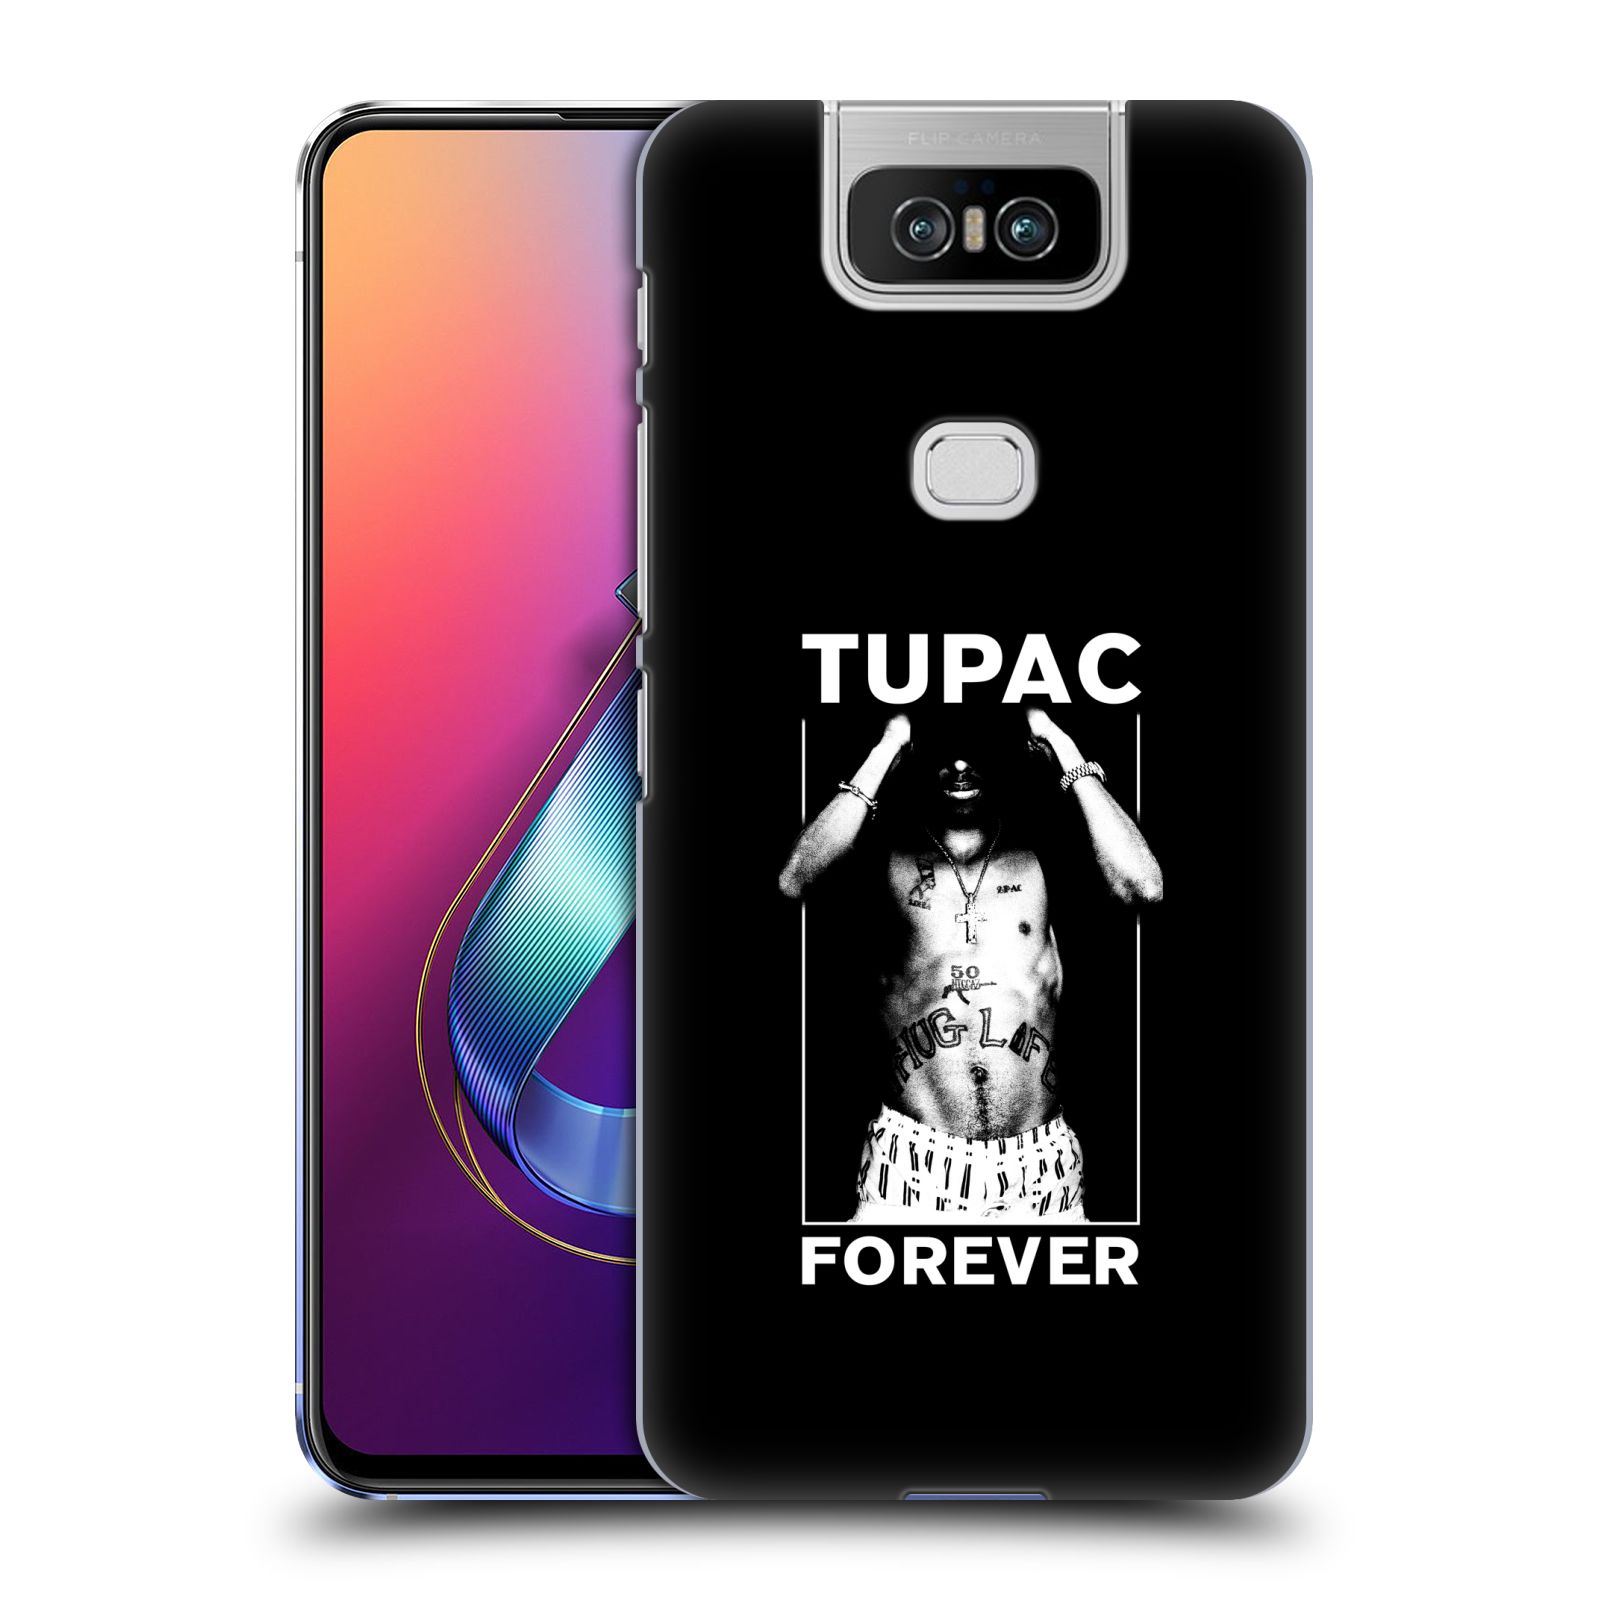 Pouzdro na mobil Asus Zenfone 6 ZS630KL - HEAD CASE - Zpěvák rapper Tupac Shakur 2Pac bílý popisek FOREVER